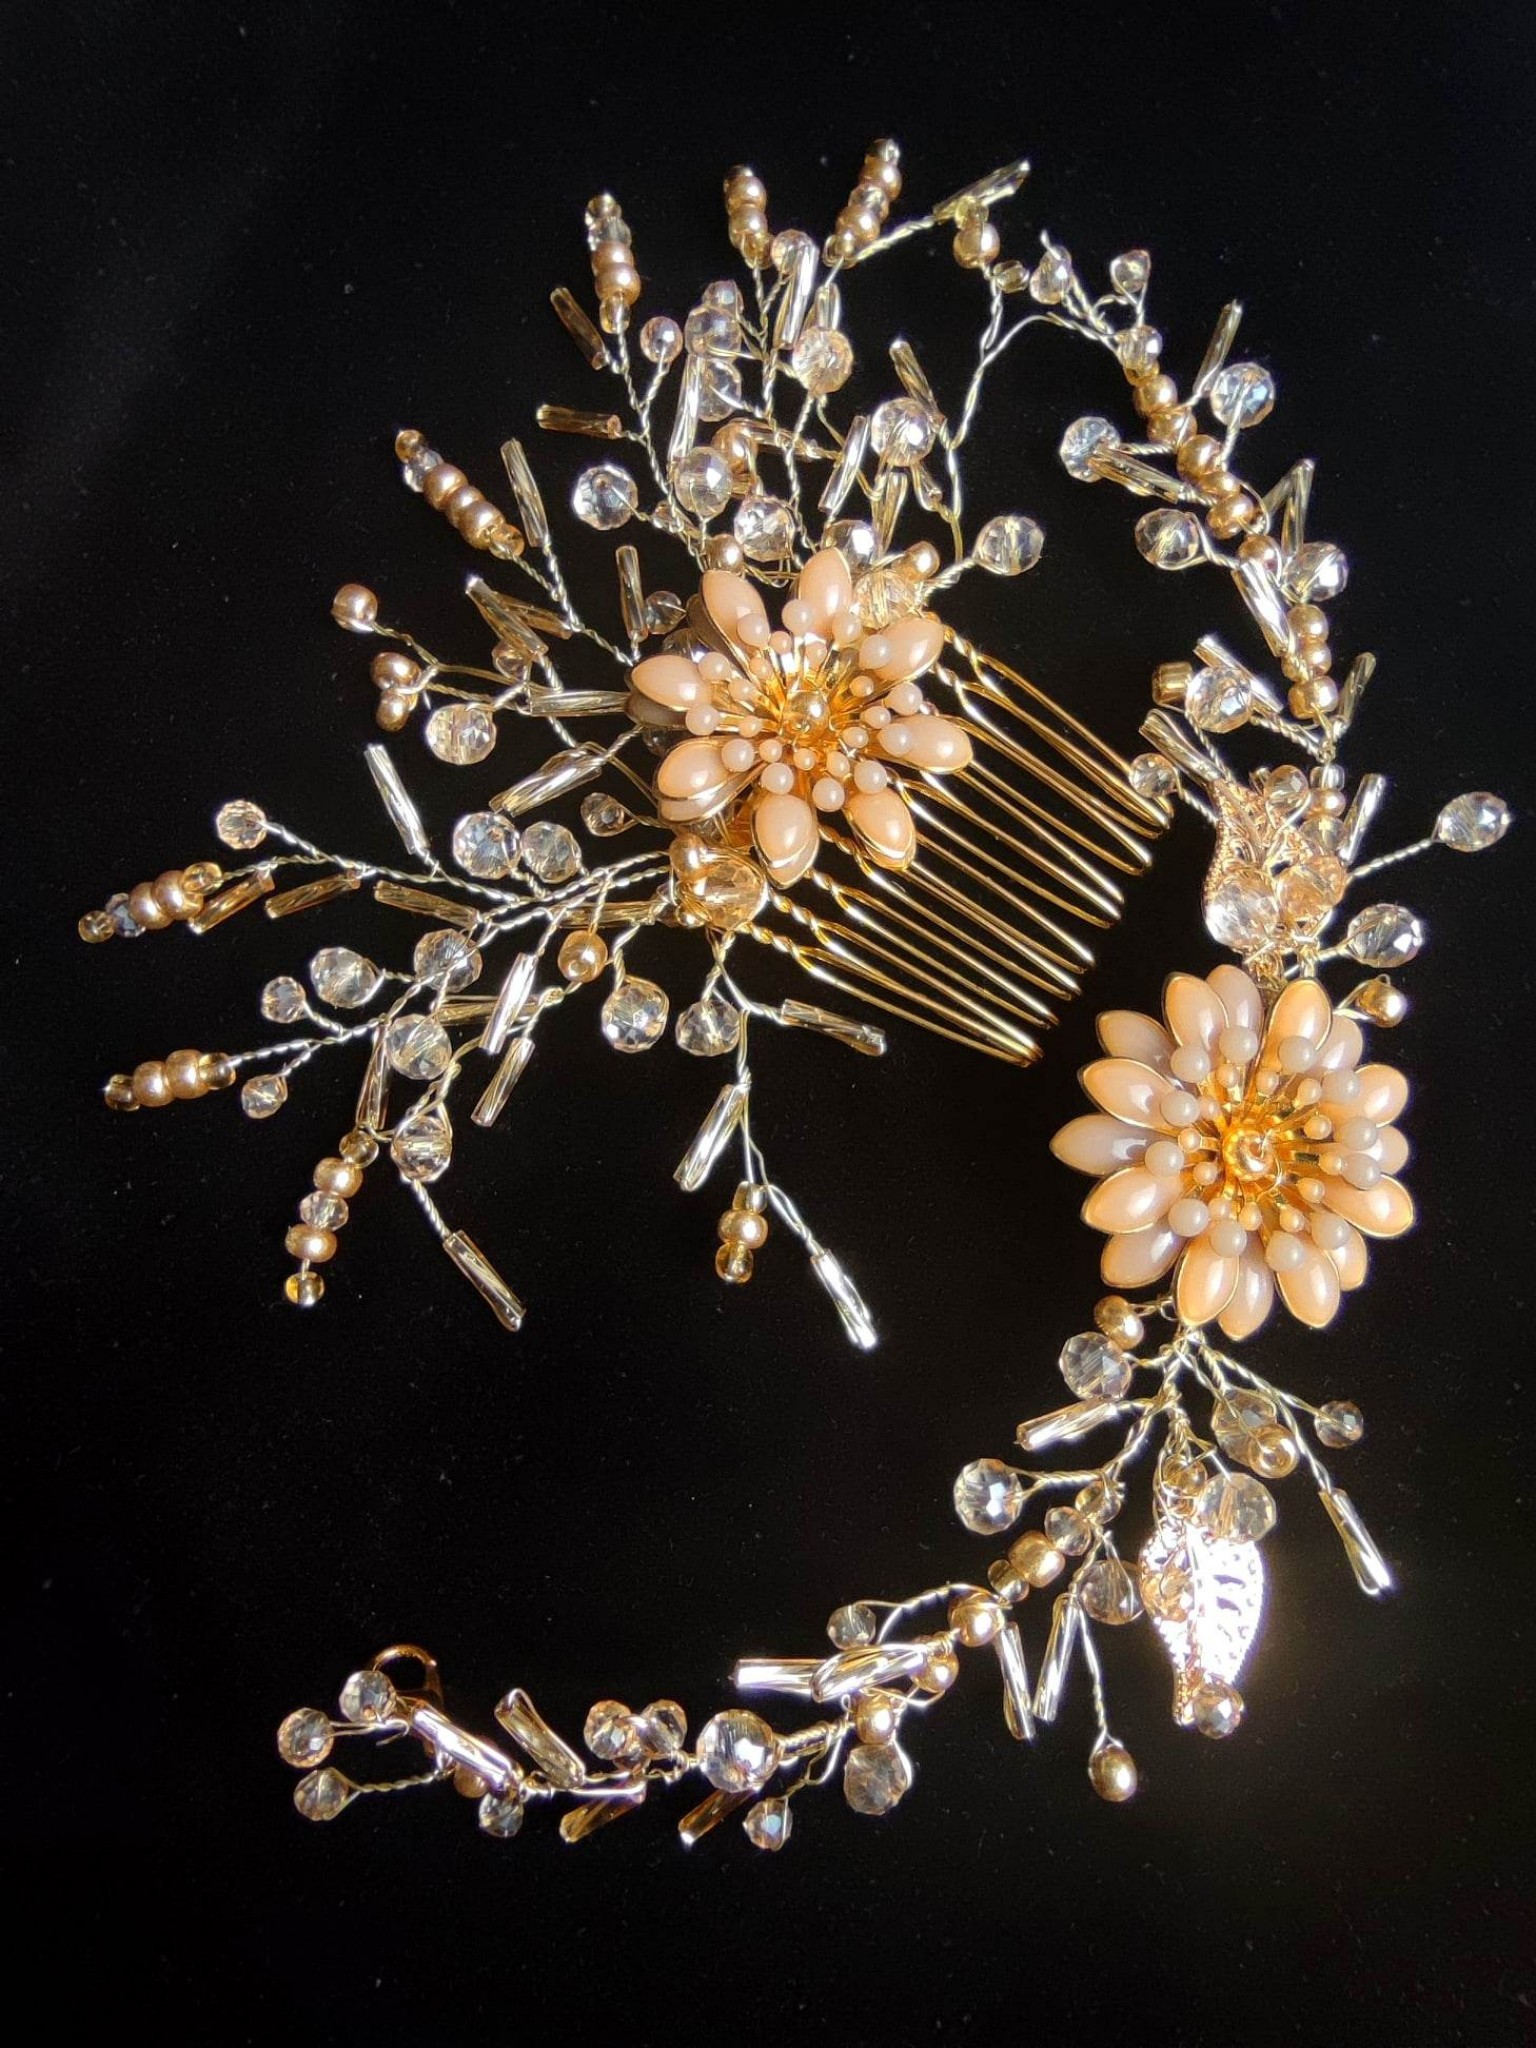 Designer Bracelet in Beige and Gold with Swarovski Crystals and Flowers - Flower of the Desert